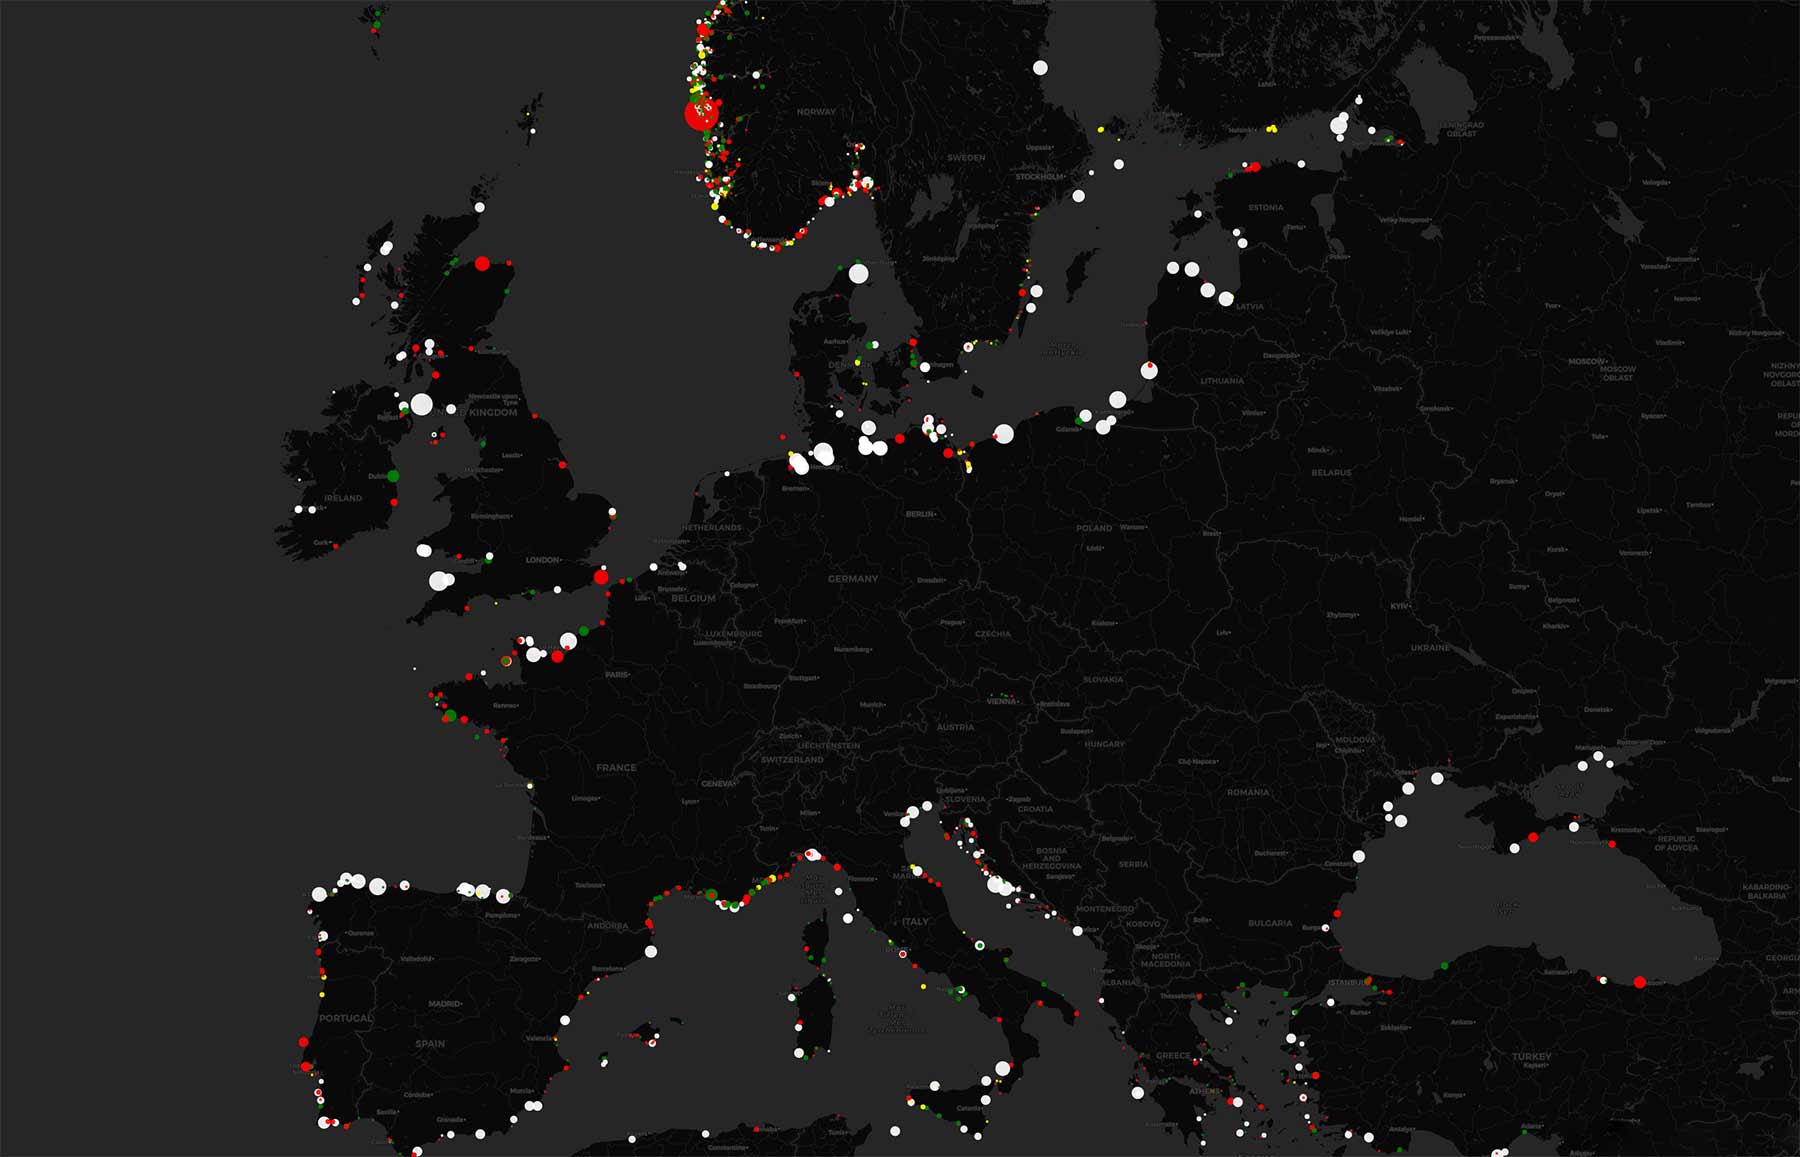 Weltkarte mit allen Leuchttürmen: "Lighthouse Map" weltkarte-mit-leuchttuermen 